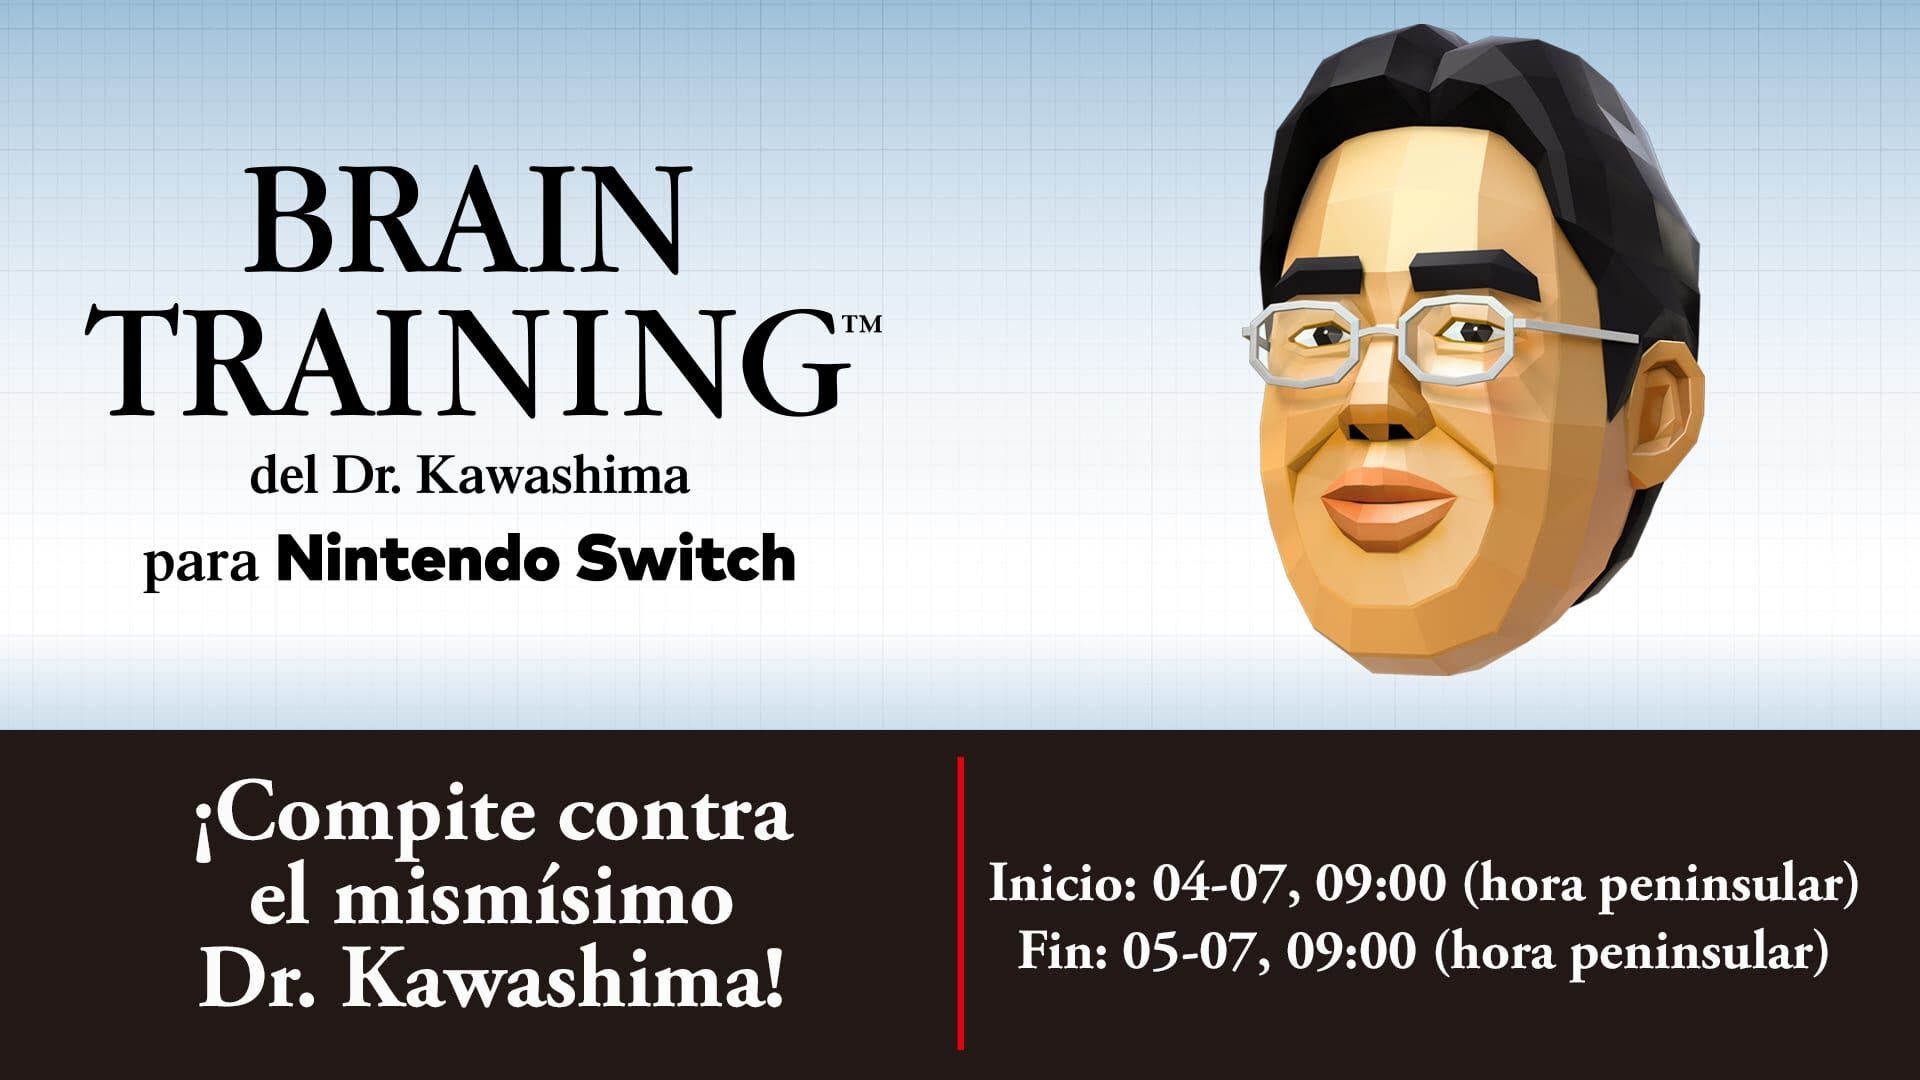 Enfréntate al mismísimo Dr. Kawashima este fin de semana en el campeonato mundial de Brain Training del Dr. Kawashima para Nintendo Switch